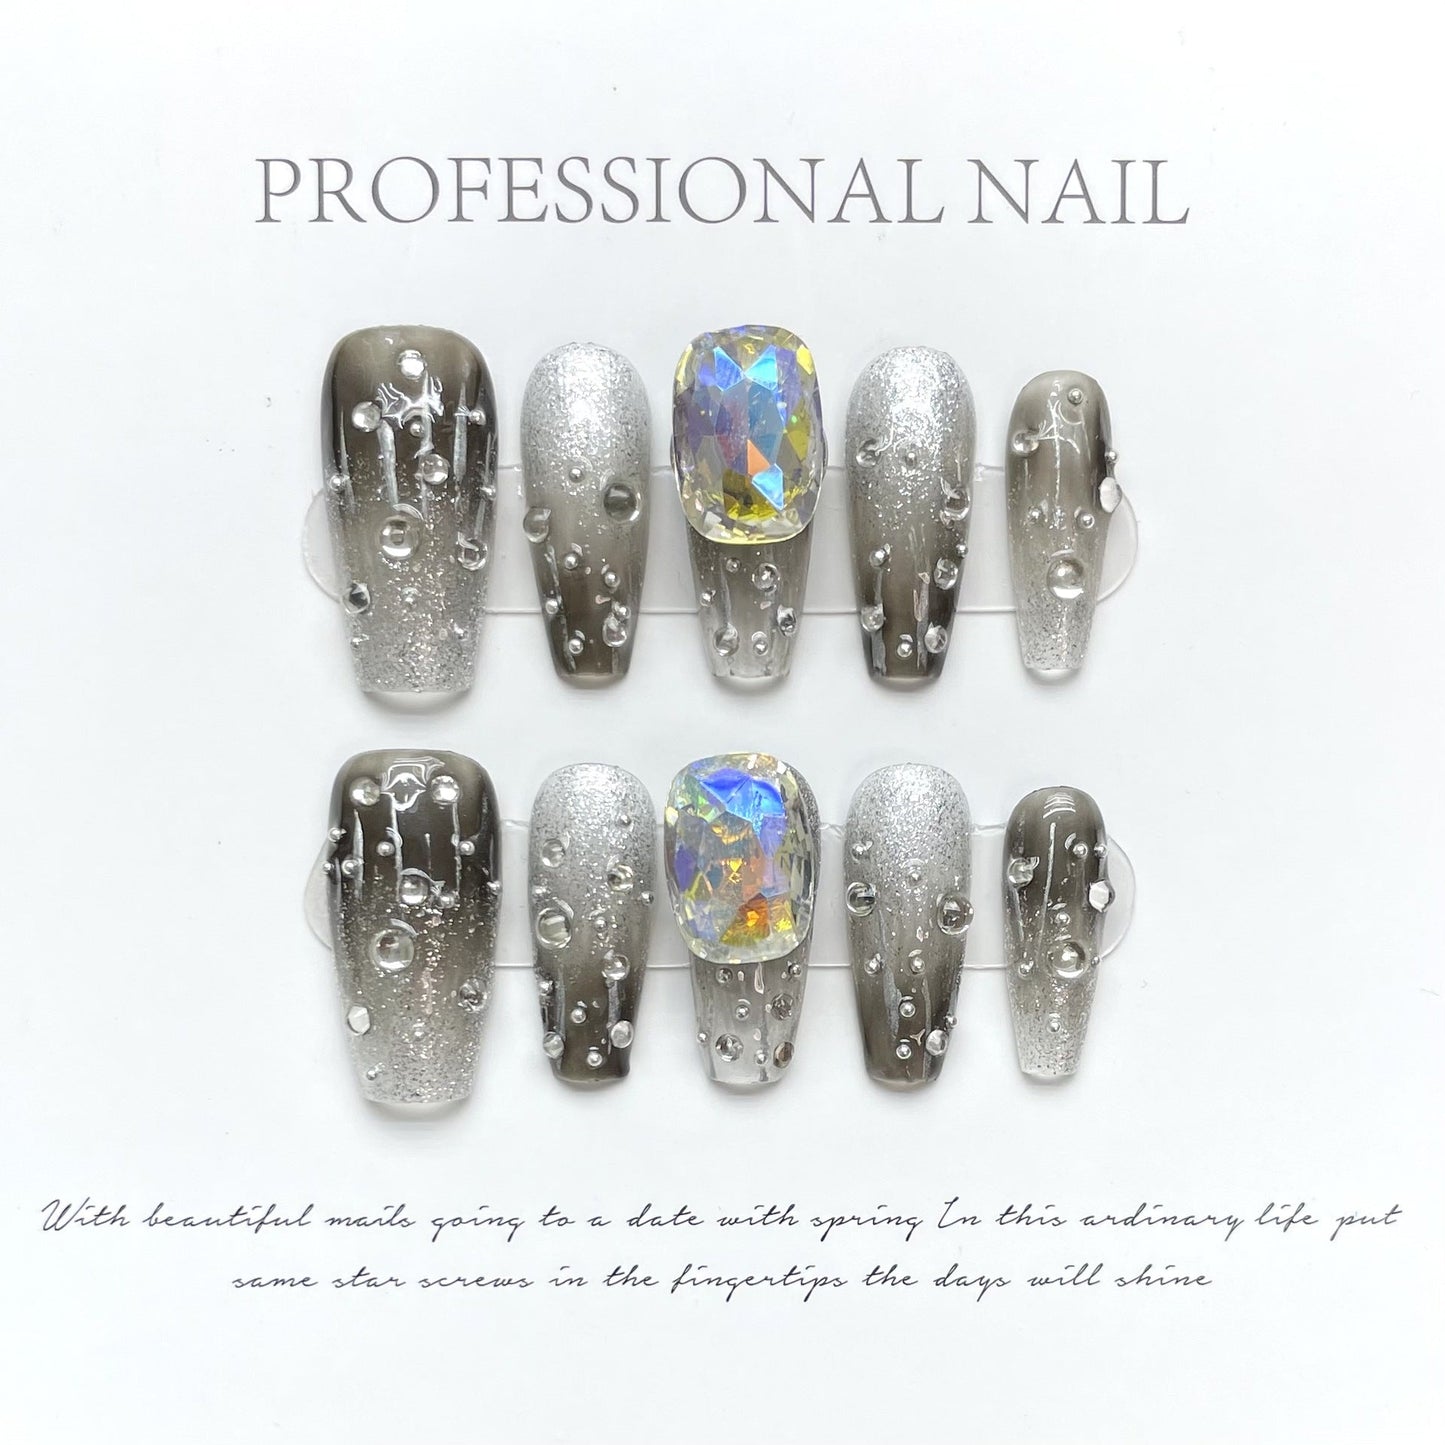 989 black style press on nails 100% handmade false nails sliver gray